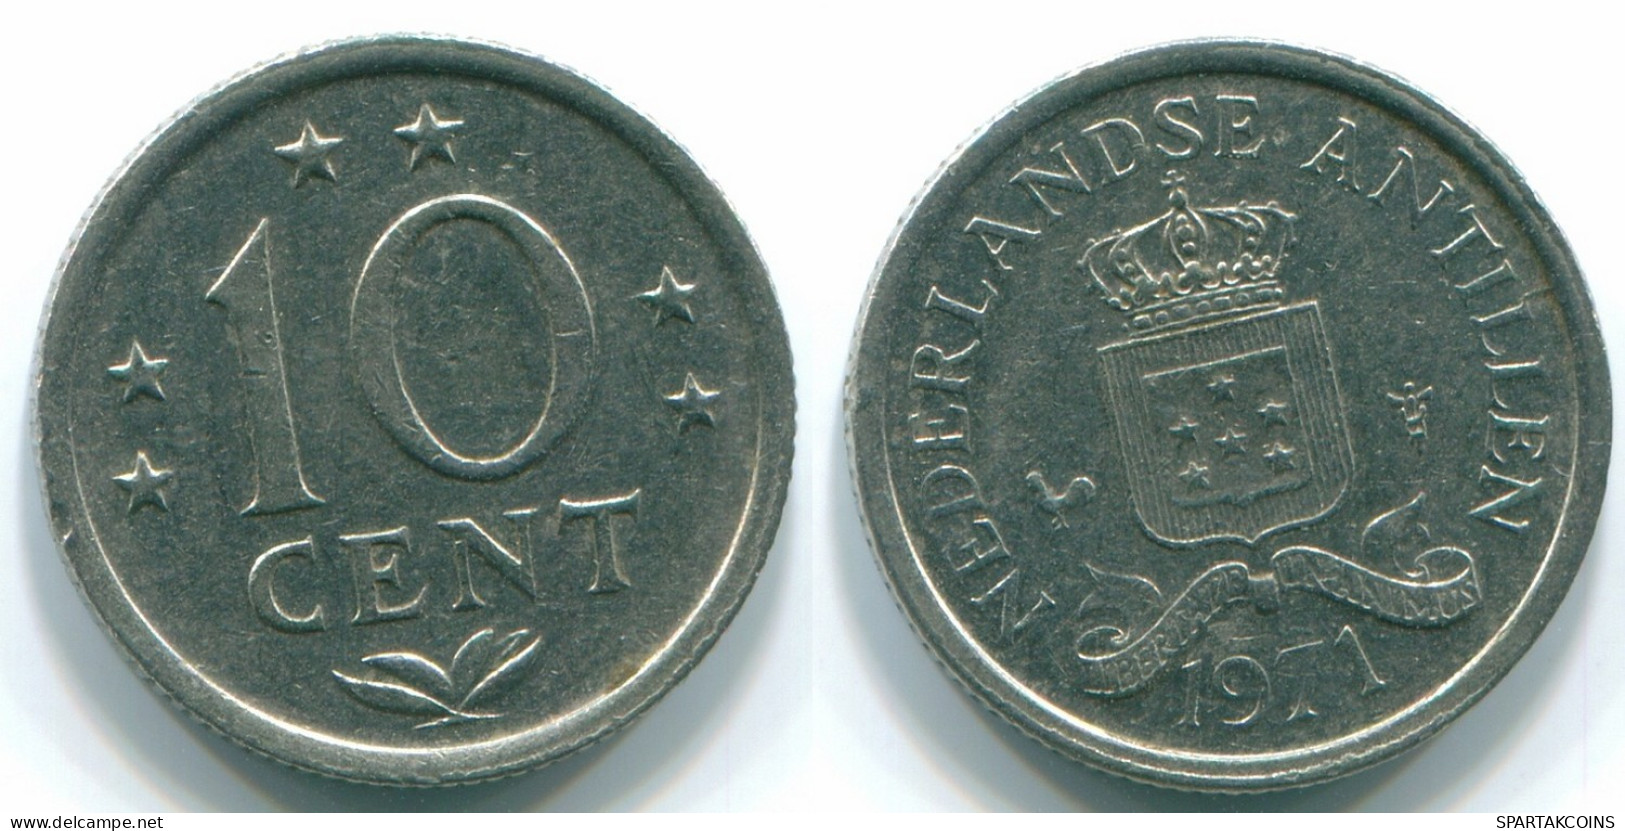 10 CENTS 1971 NIEDERLÄNDISCHE ANTILLEN Nickel Koloniale Münze #S13416.D.A - Nederlandse Antillen